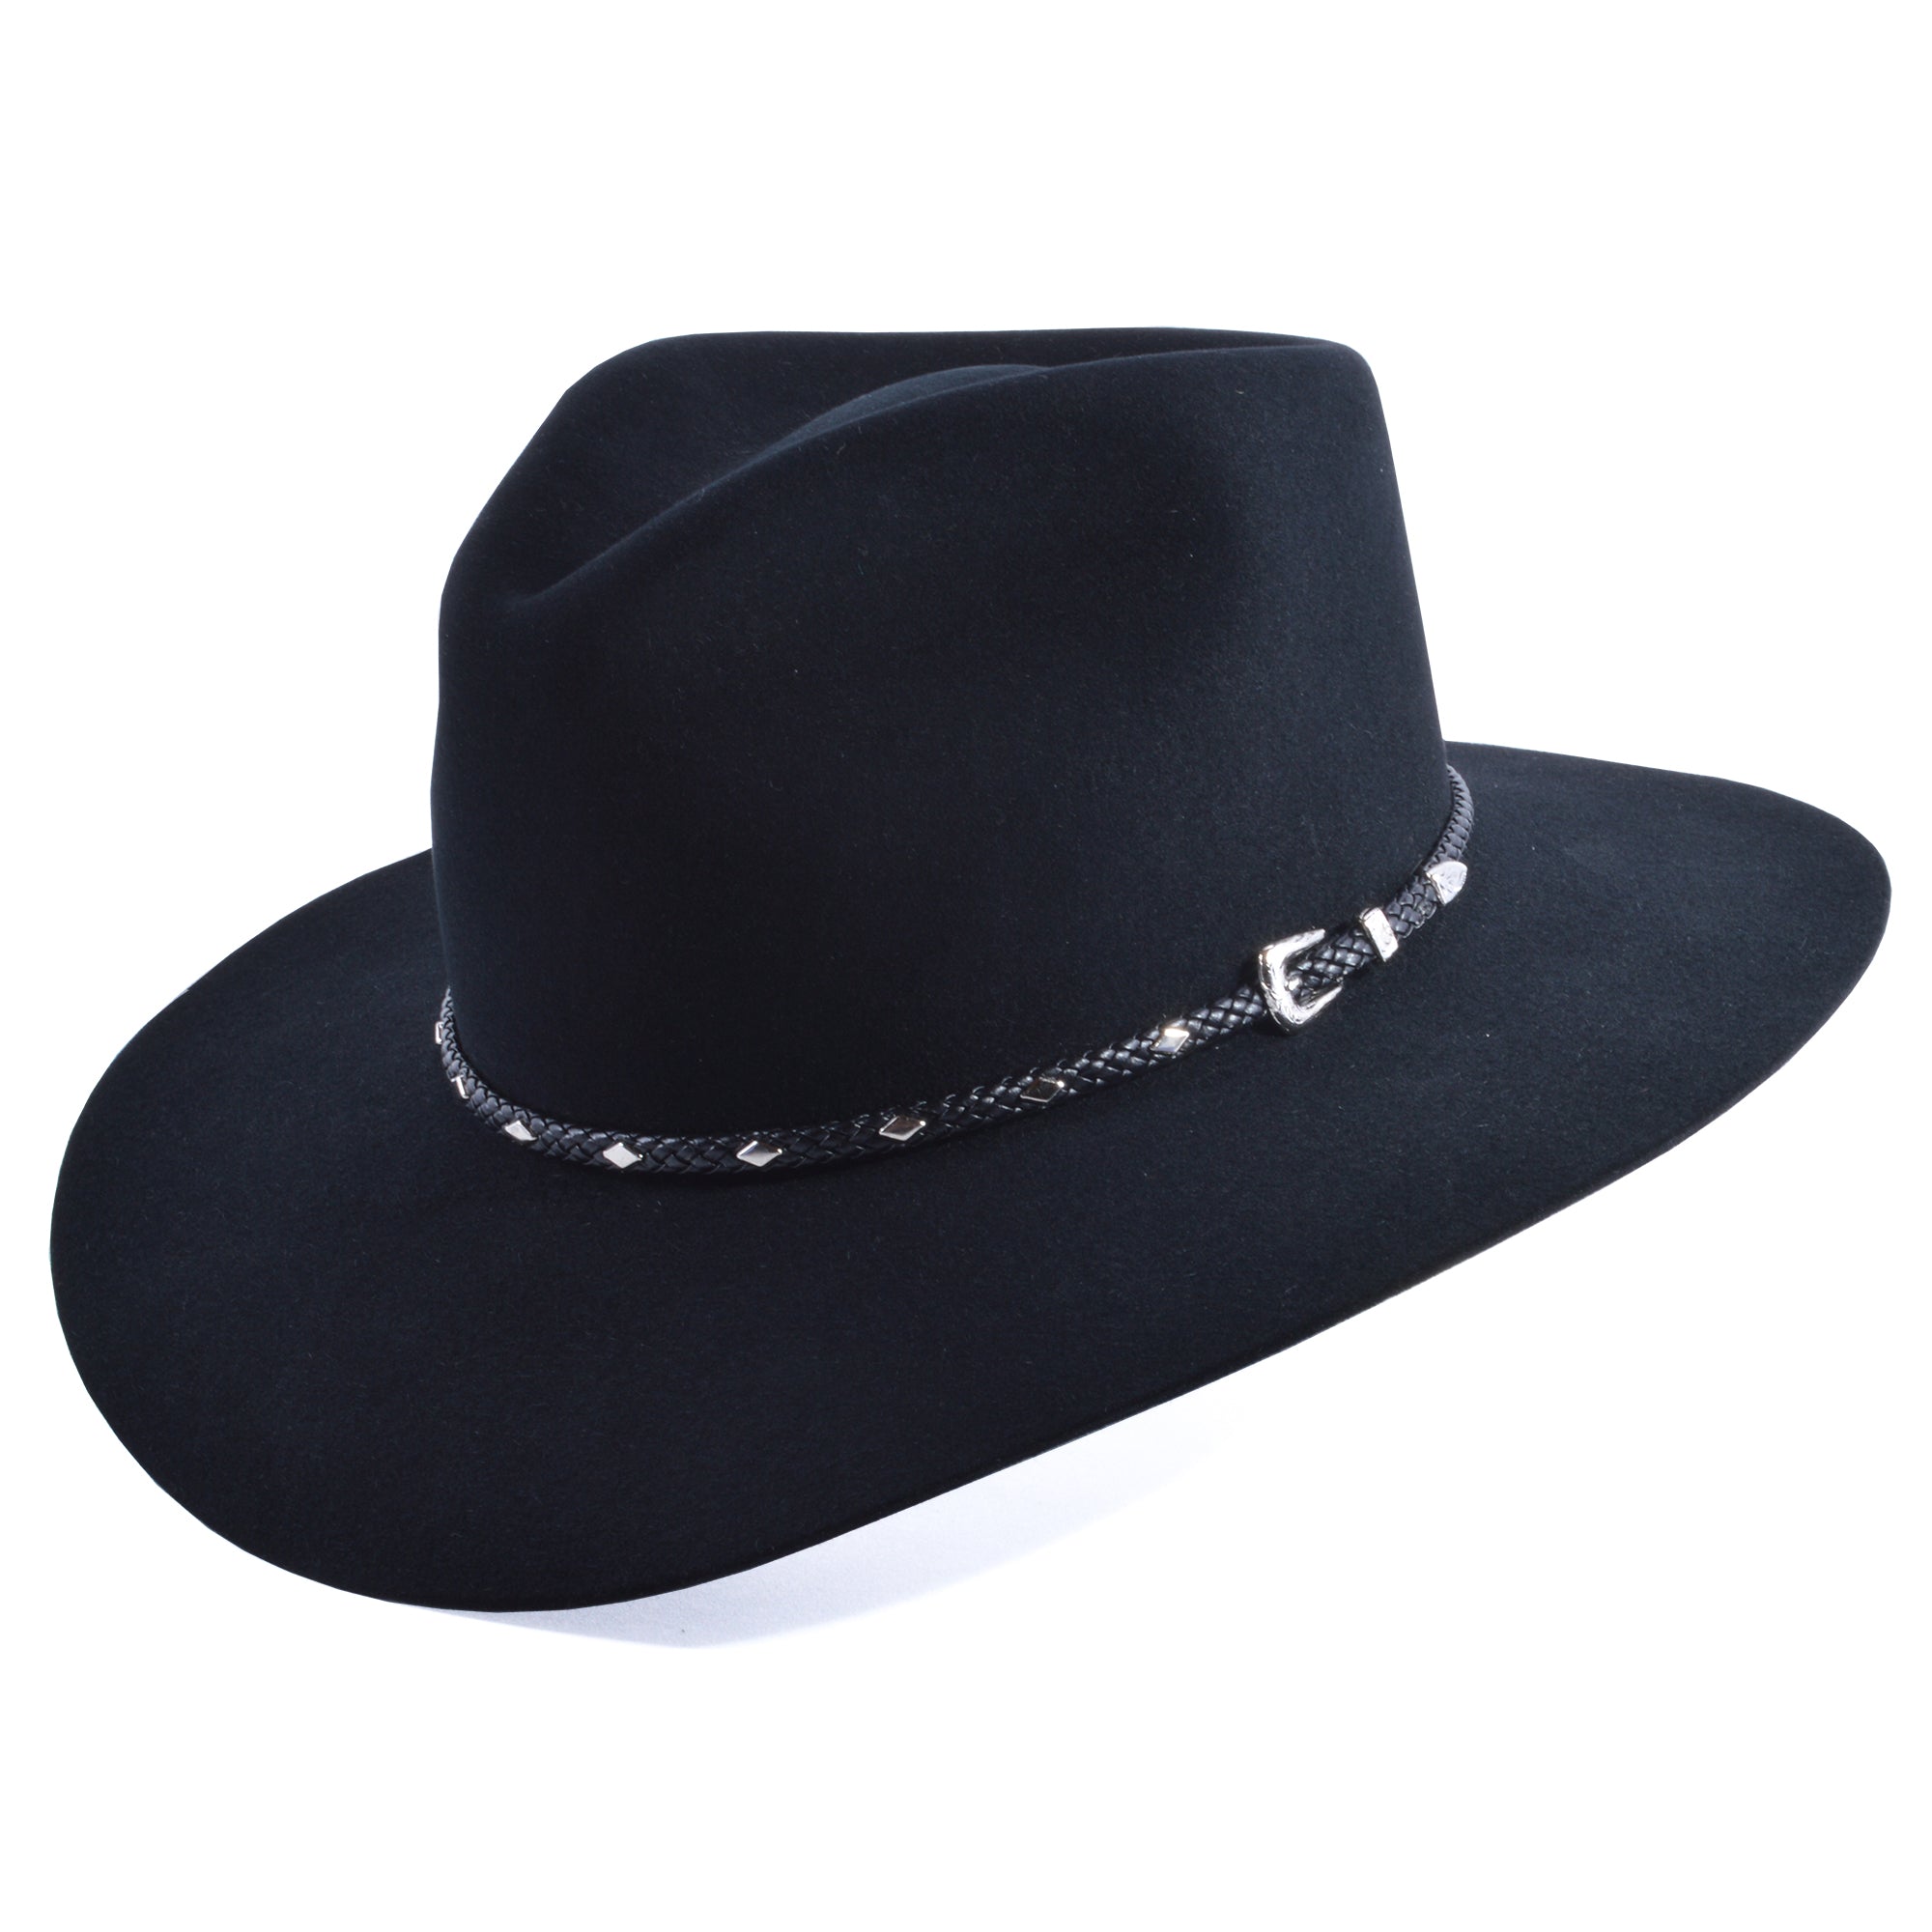 Stetson 5X Fur Felt Diamond Jim Hat with Hat Box-1